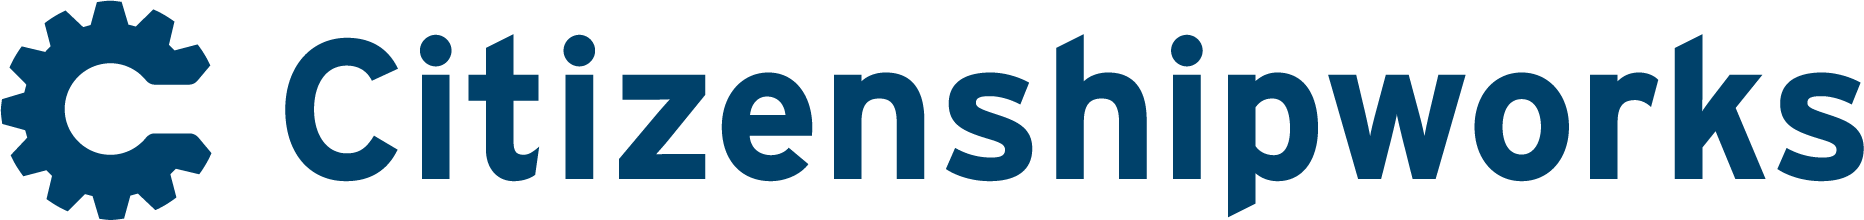 CitizenshipWorks logo